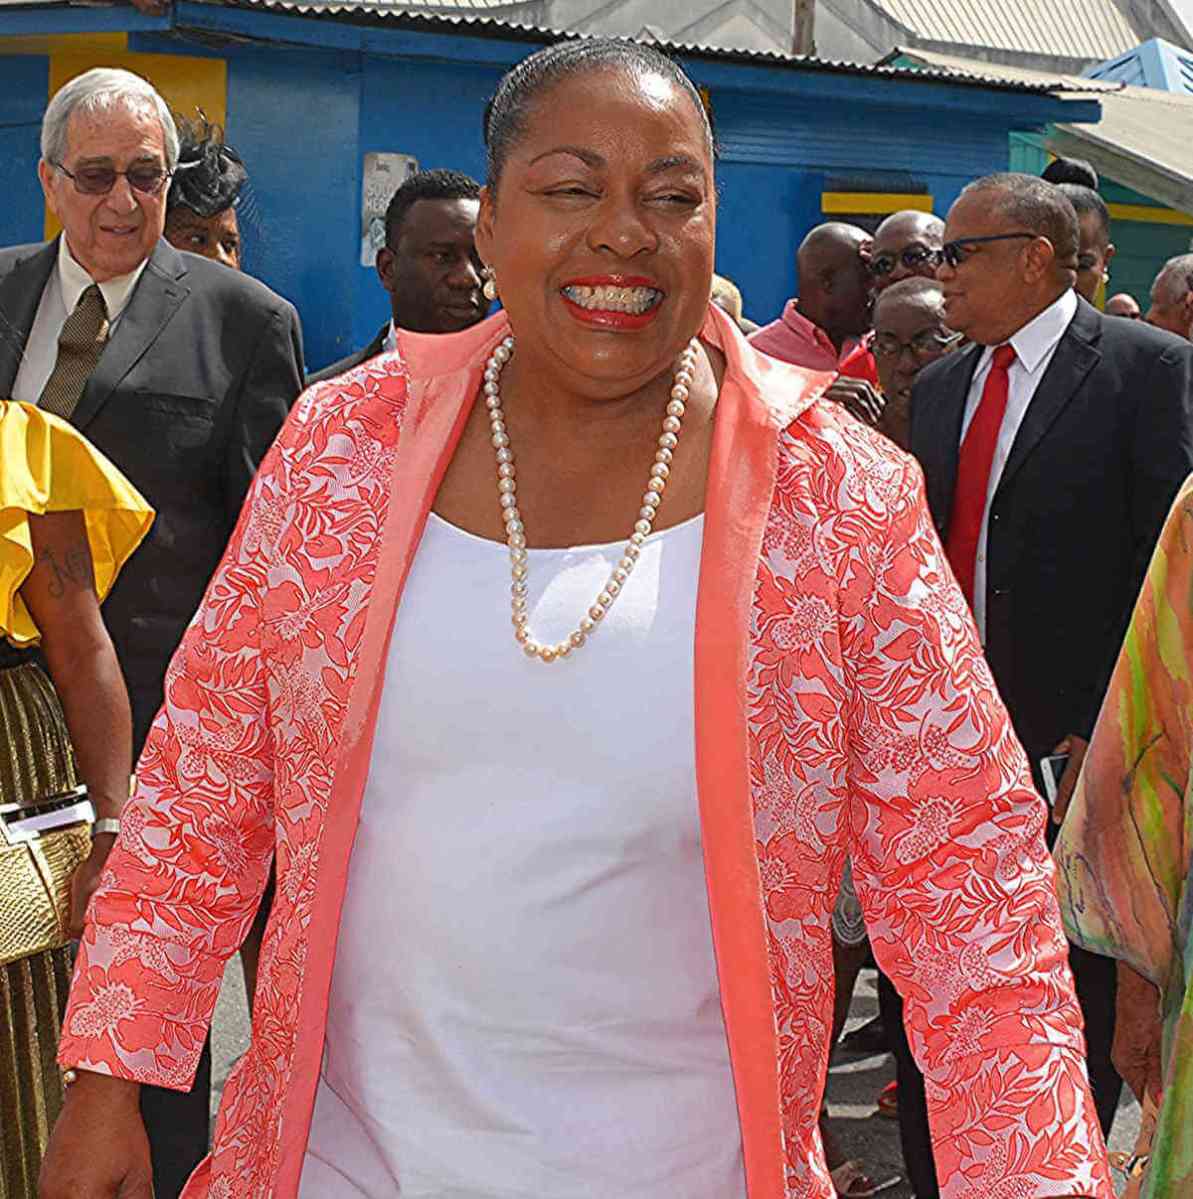 N-word used on Barbados prime minister